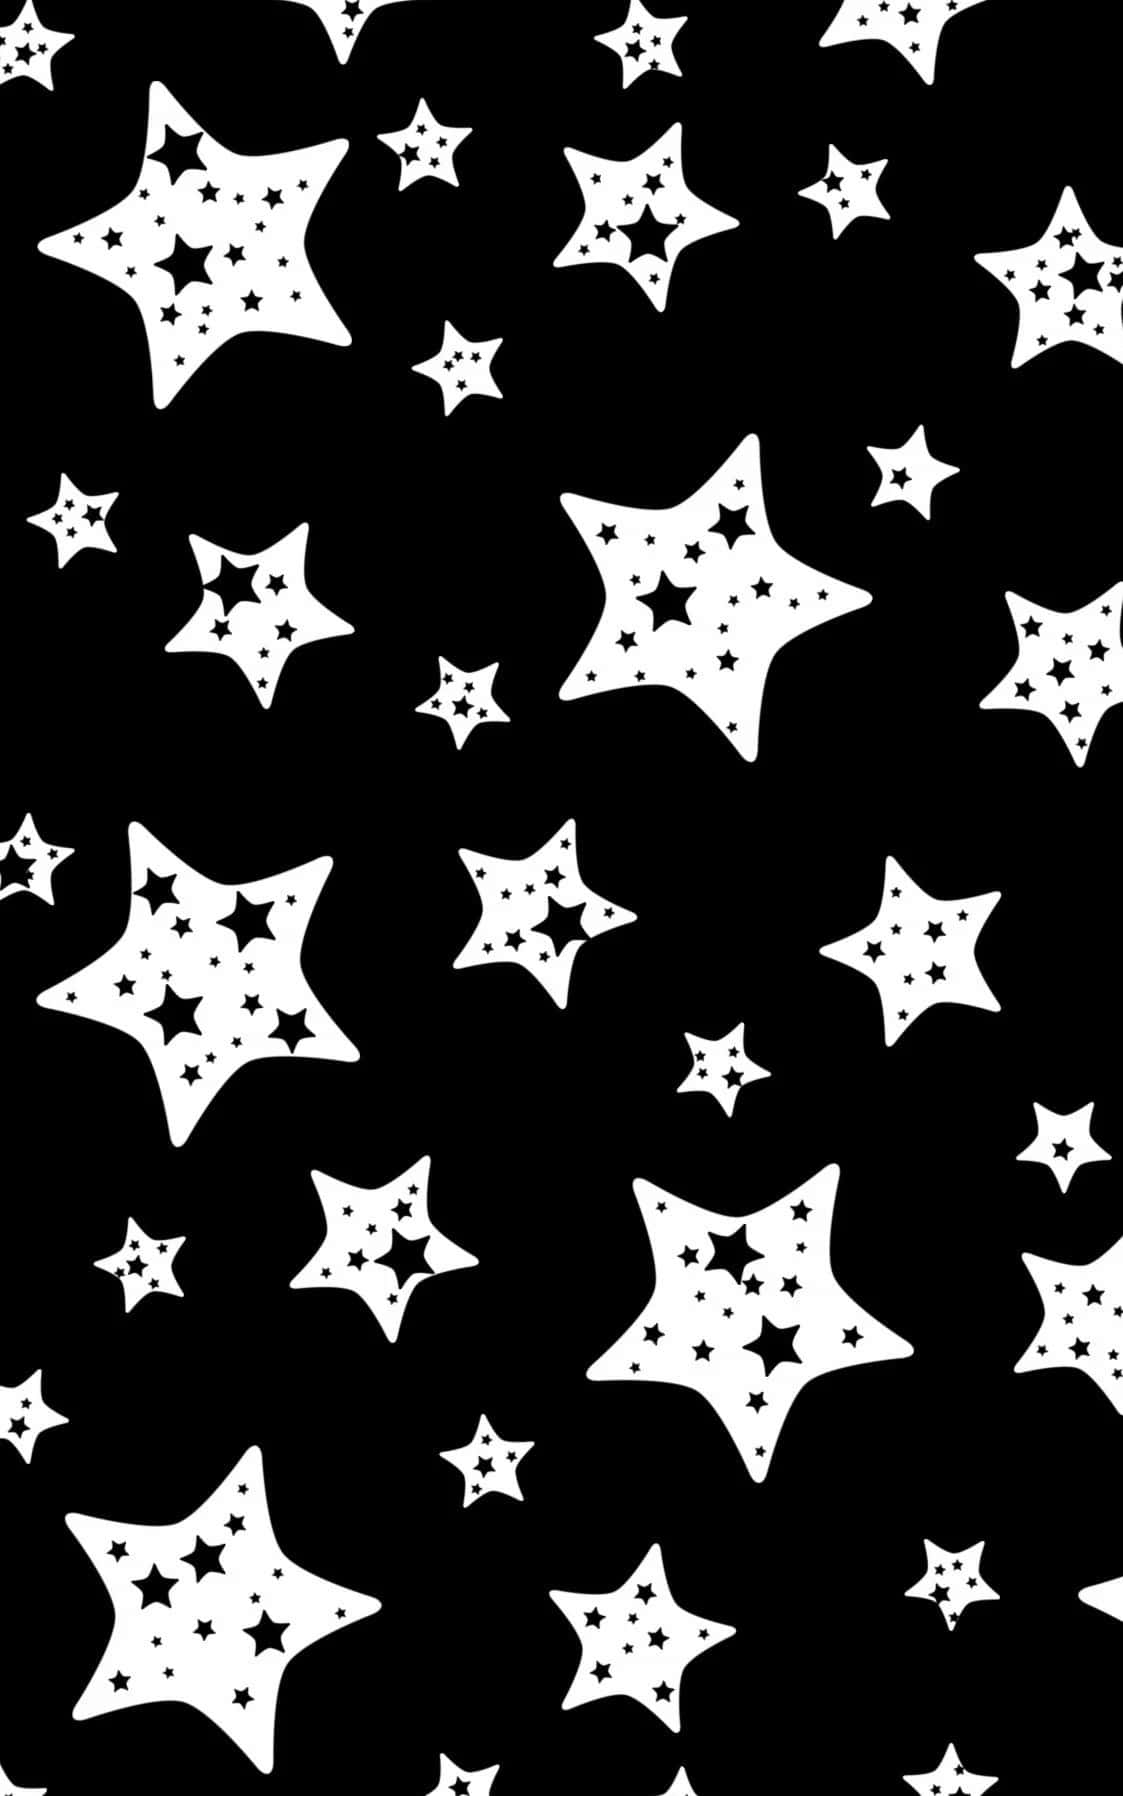 Black and White Star Wallpaper